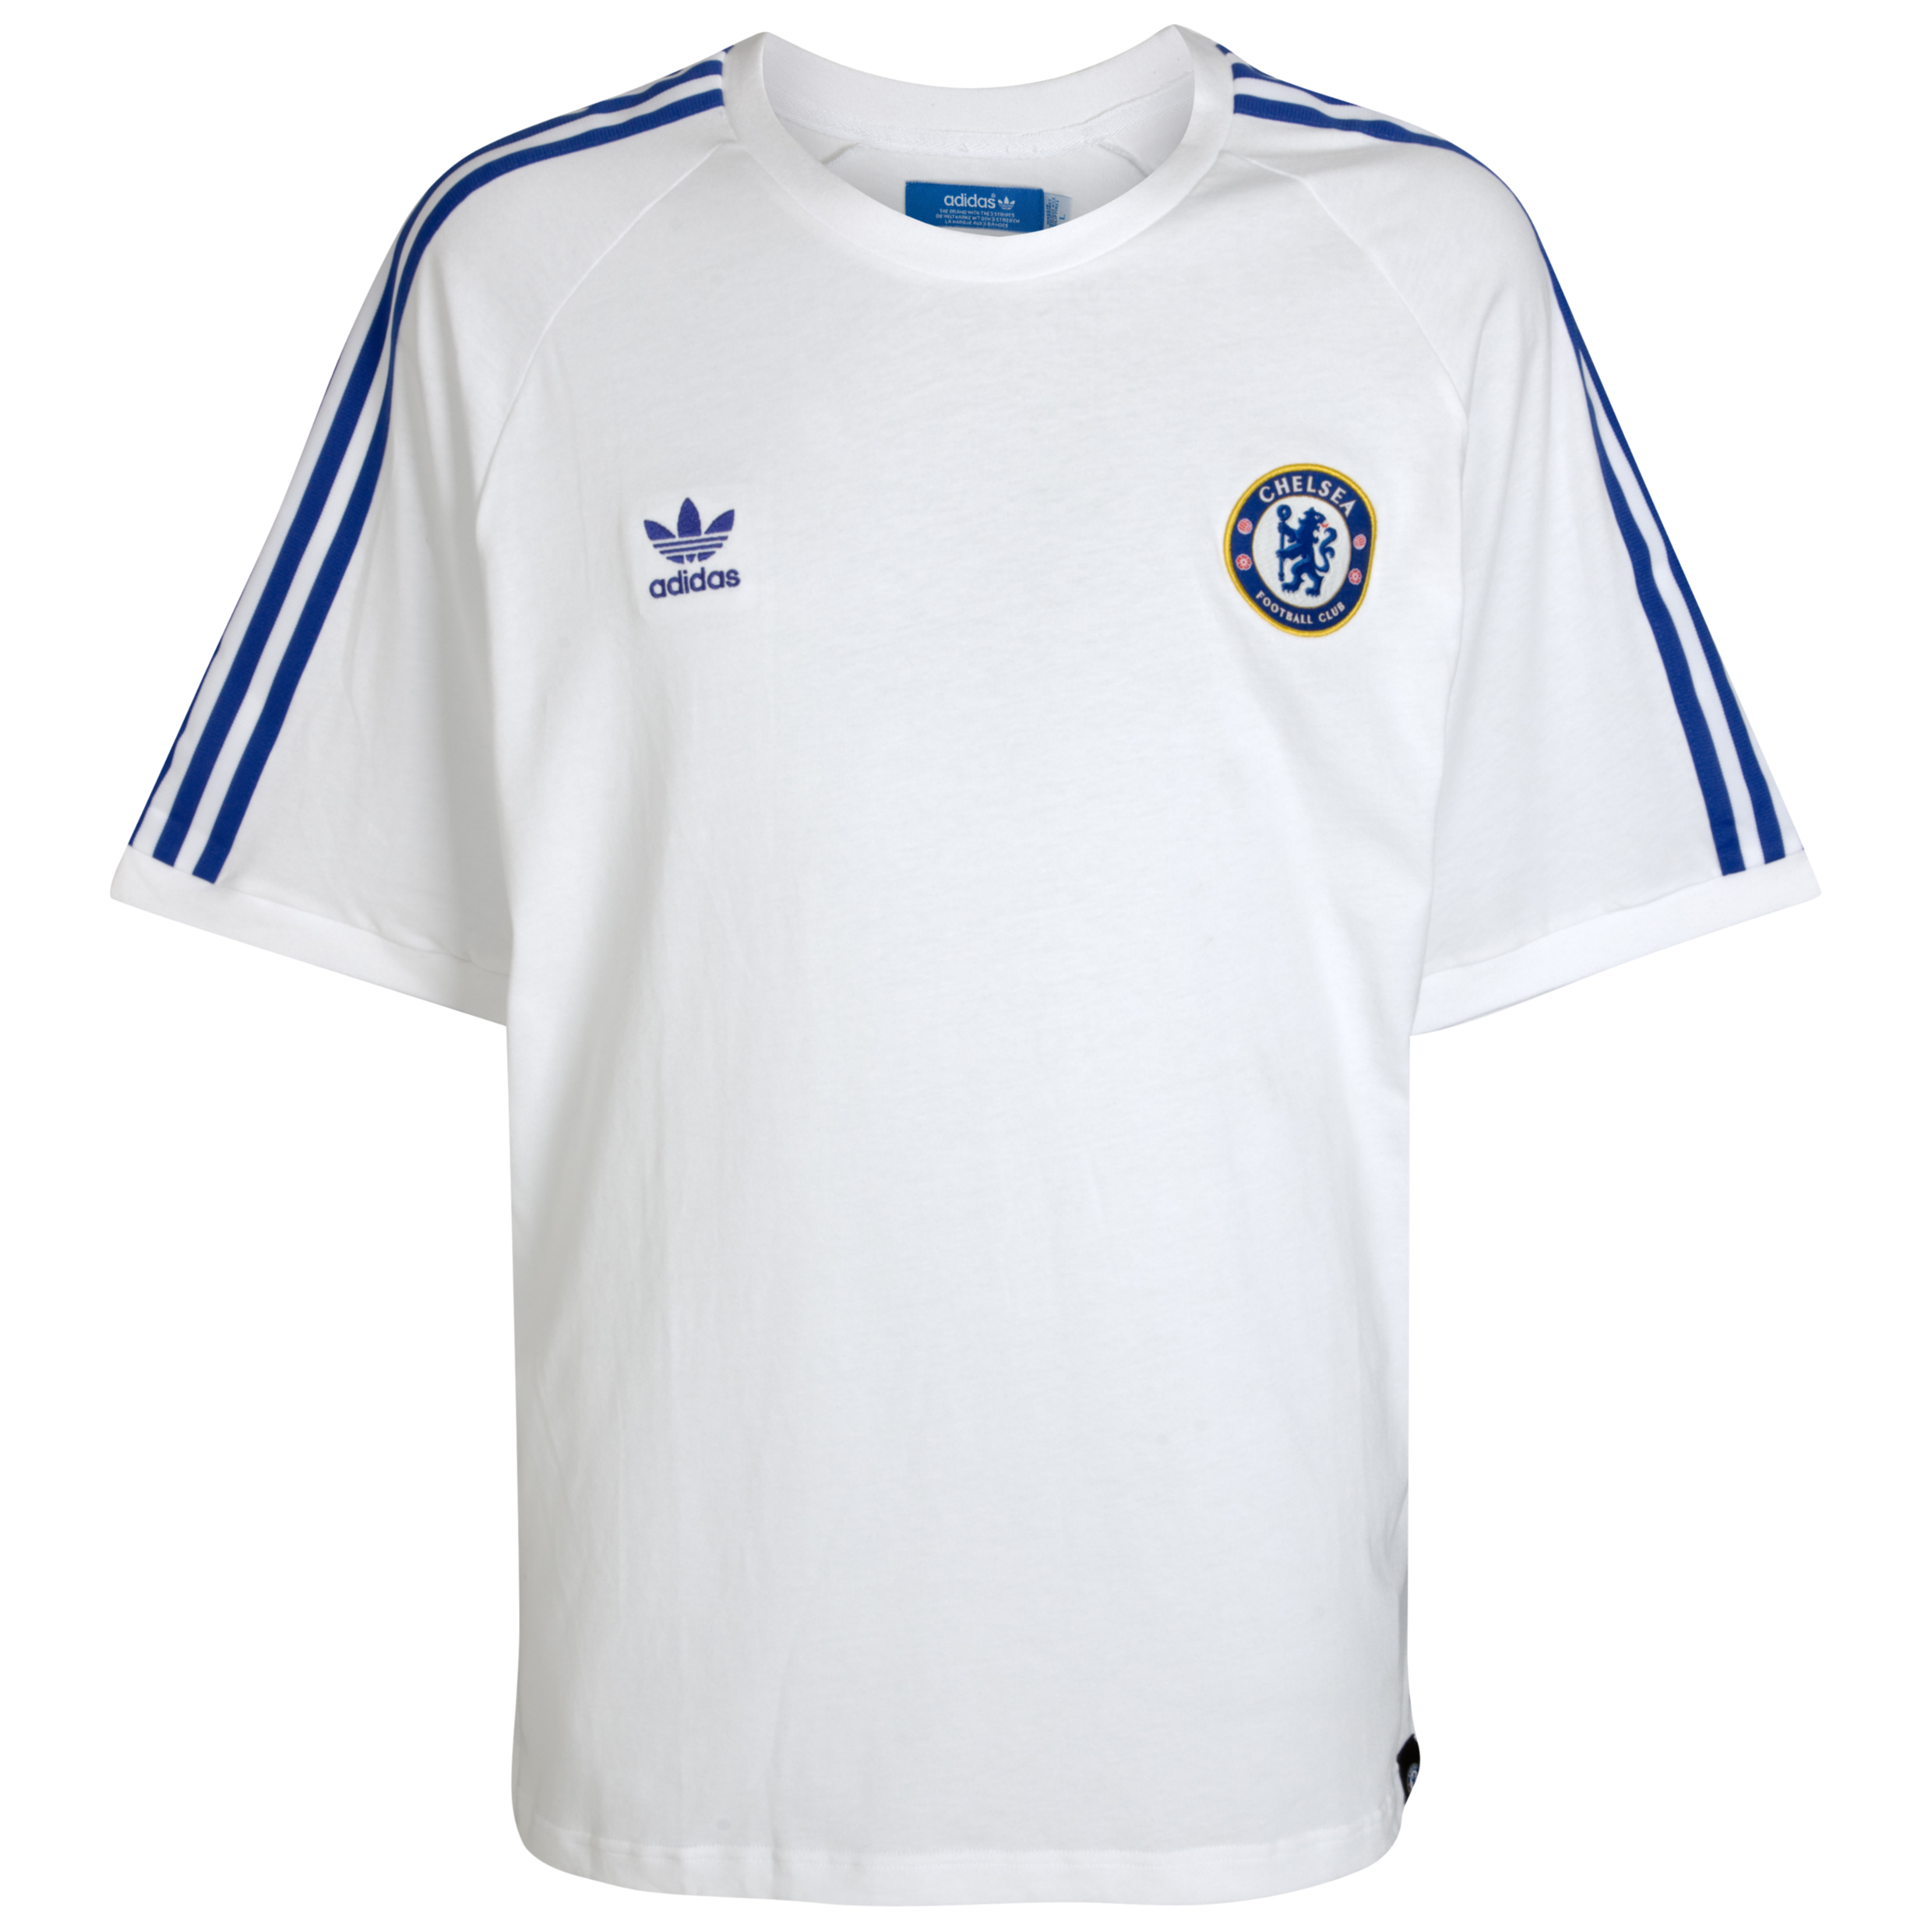 adidas Originals Chelsea T Shirt WhiteCobalt